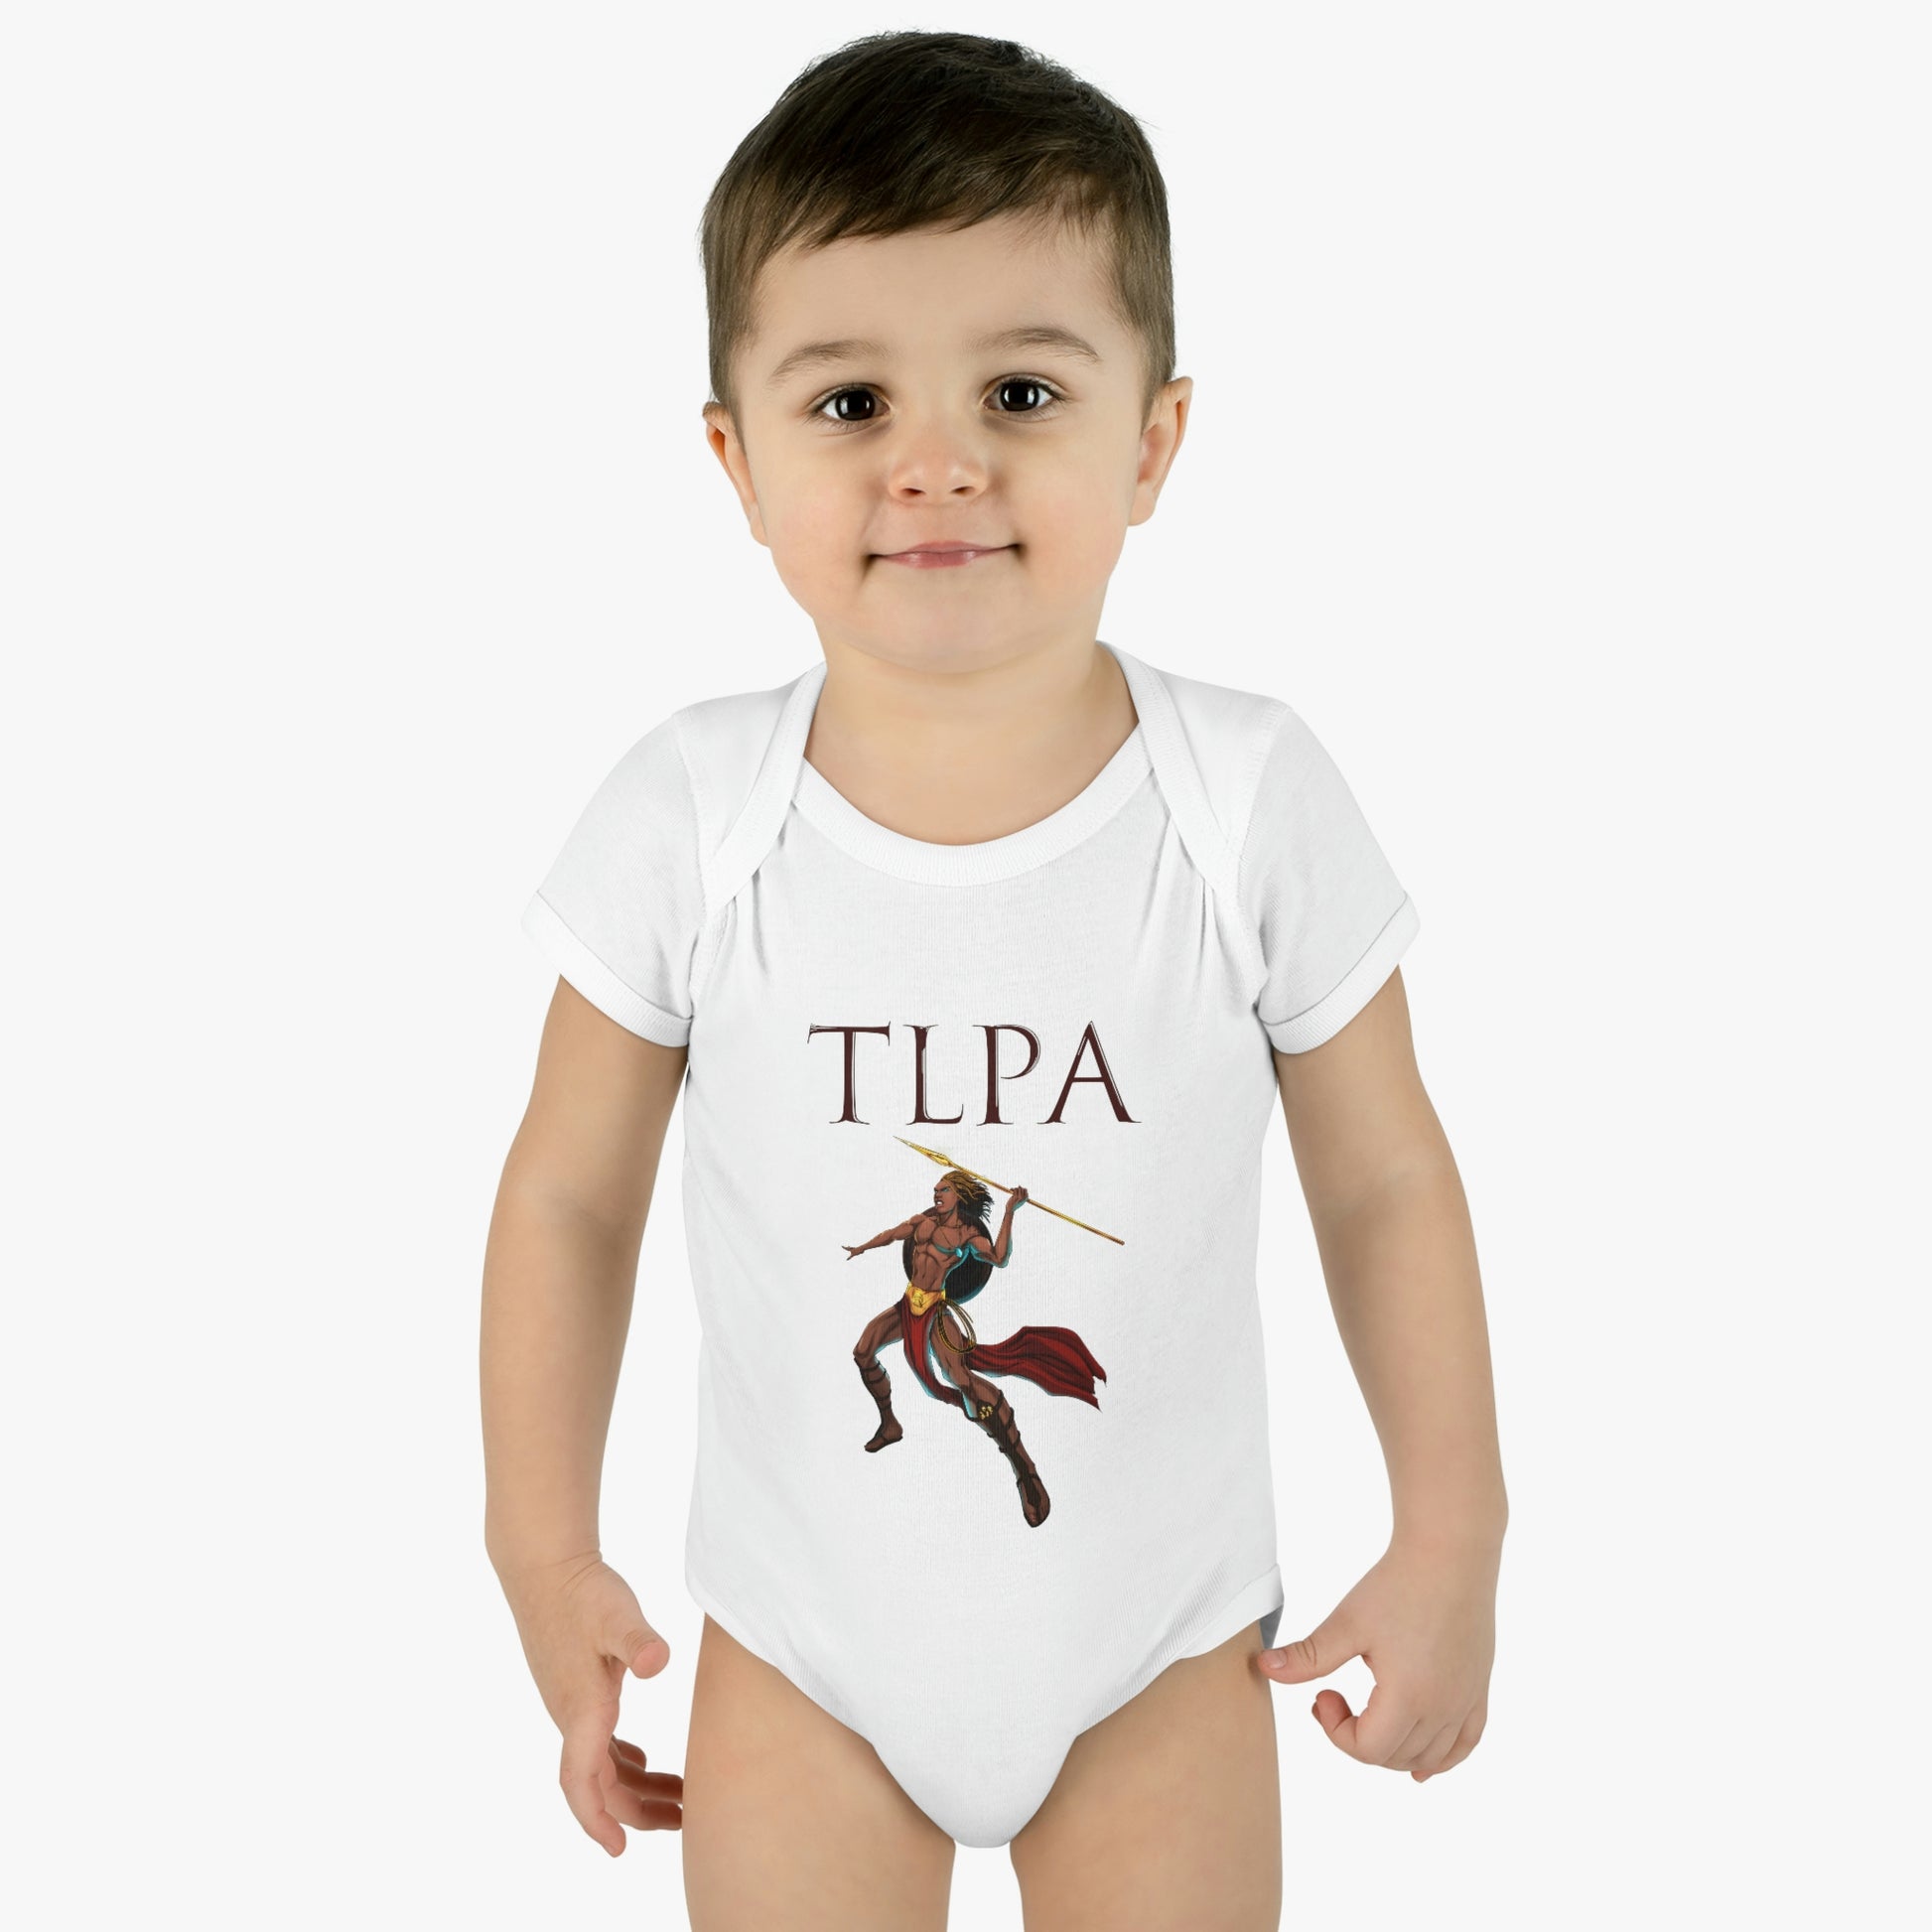 TLPA Infant Baby Rib Bodysuit - SHOPTLPA.COM